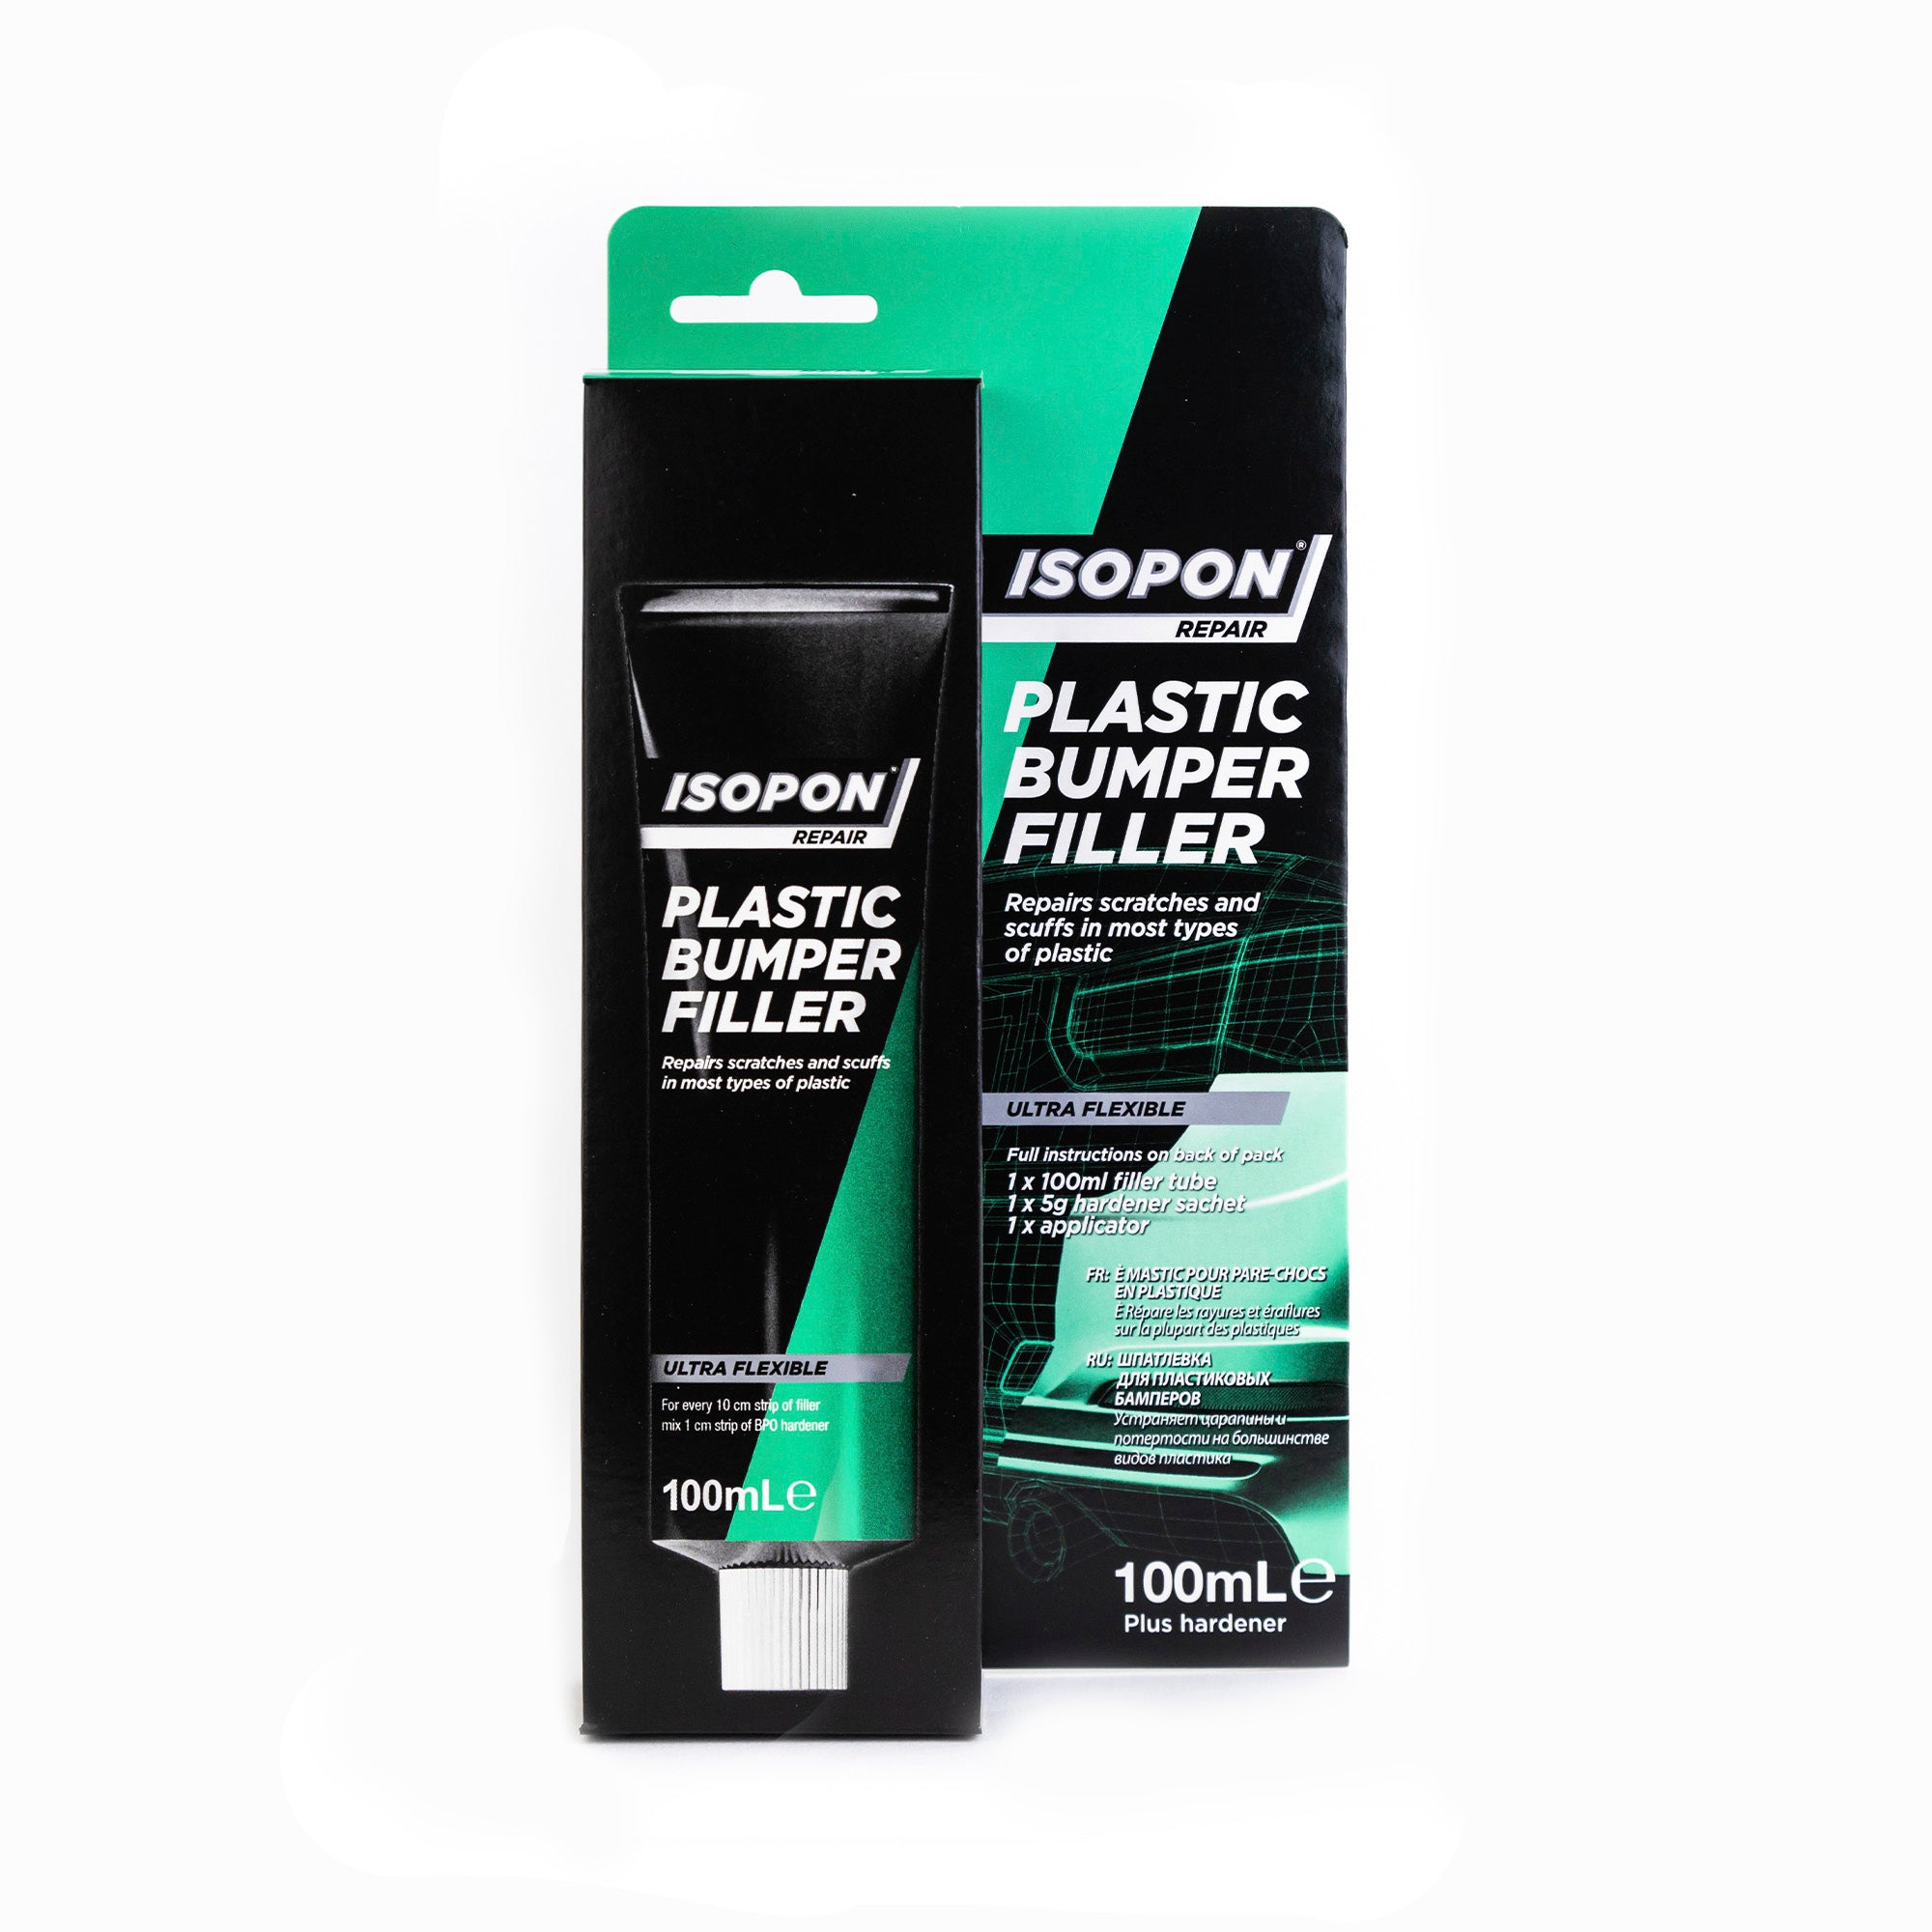 U-pol Plast X Highly Flexible Body Filler for Plastics